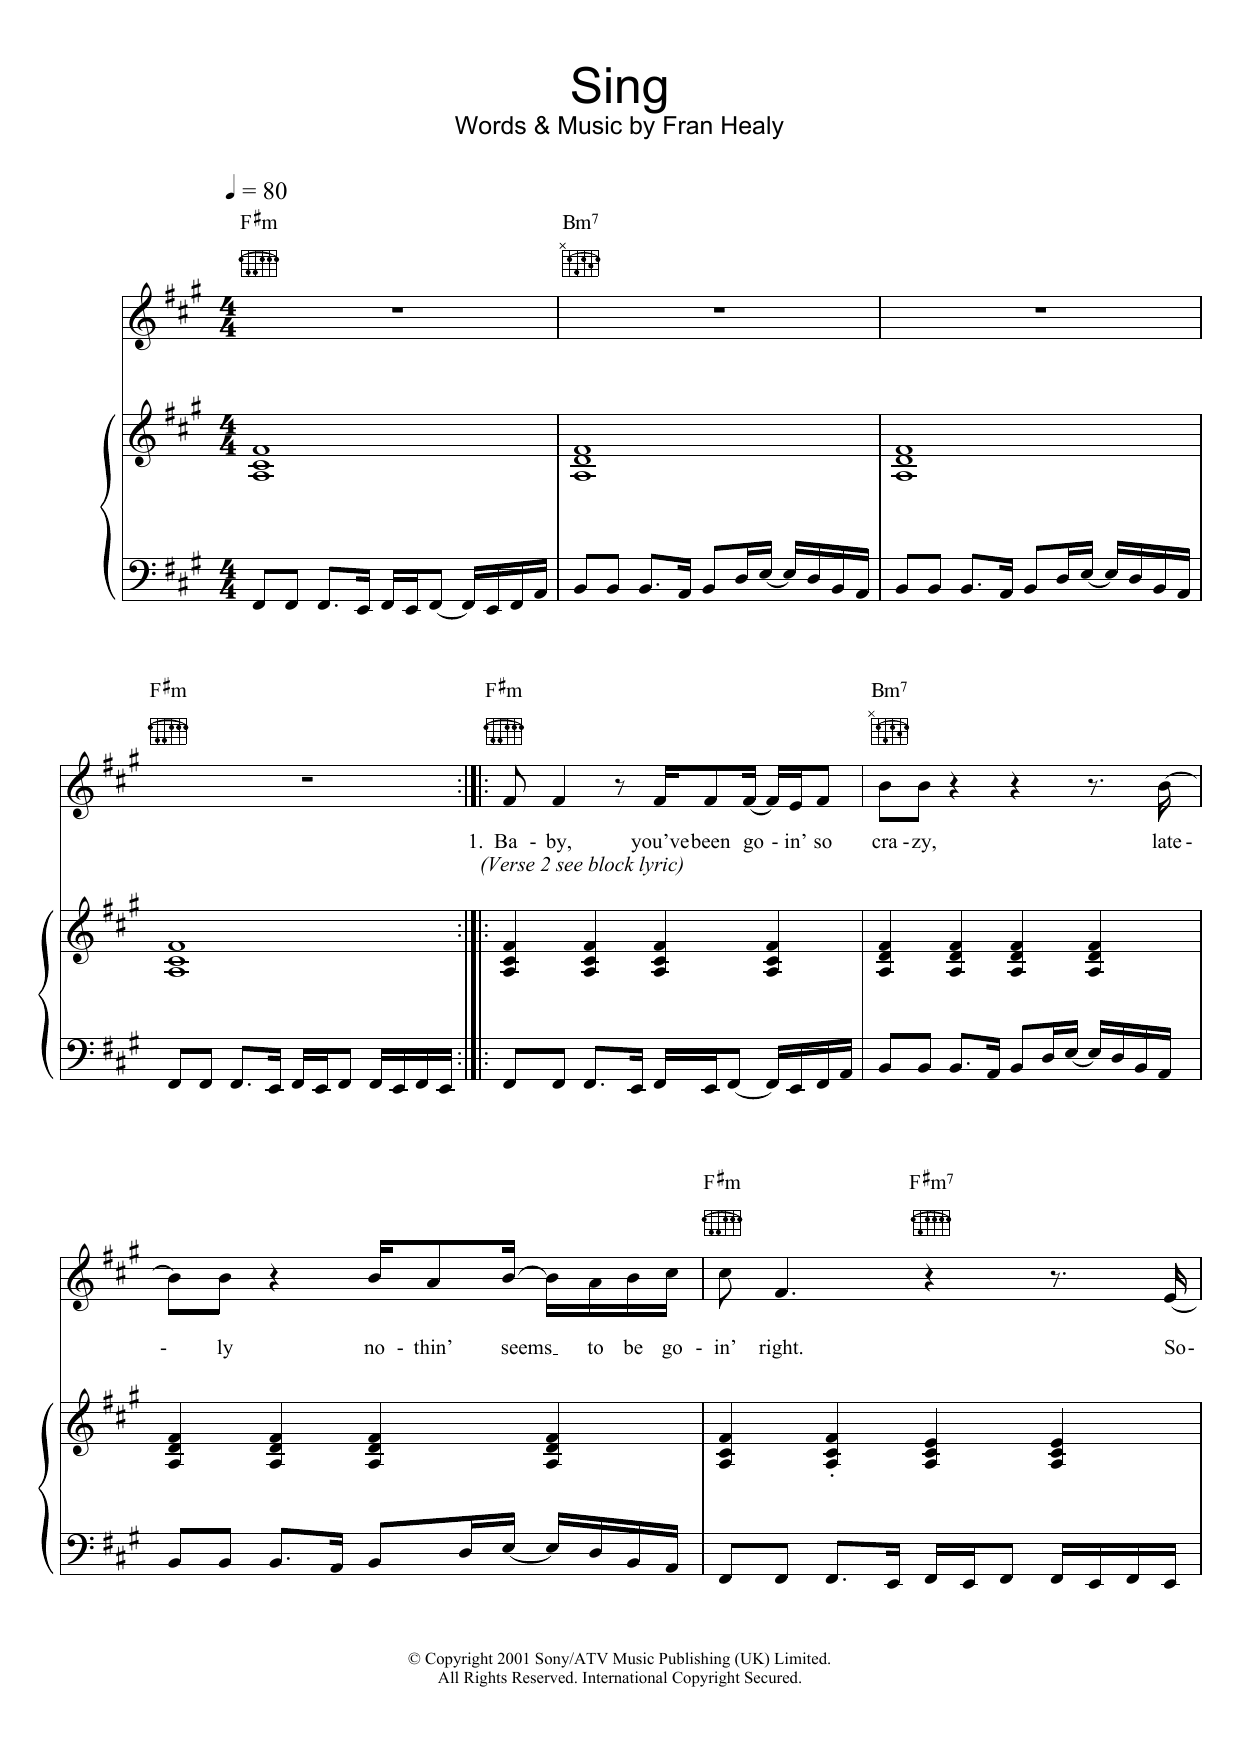 Travis Sing Sheet Music Notes & Chords for Alto Saxophone - Download or Print PDF